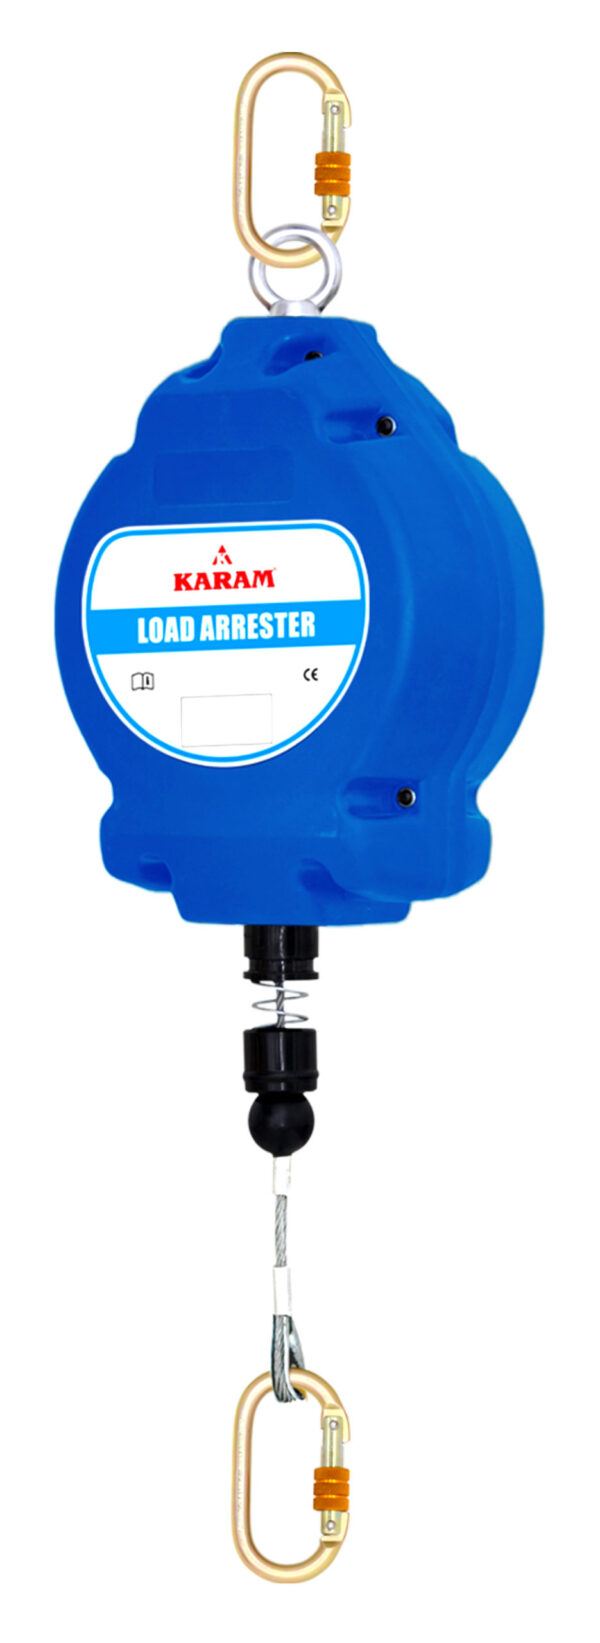 KARAM LA0400-10 Load Arrester